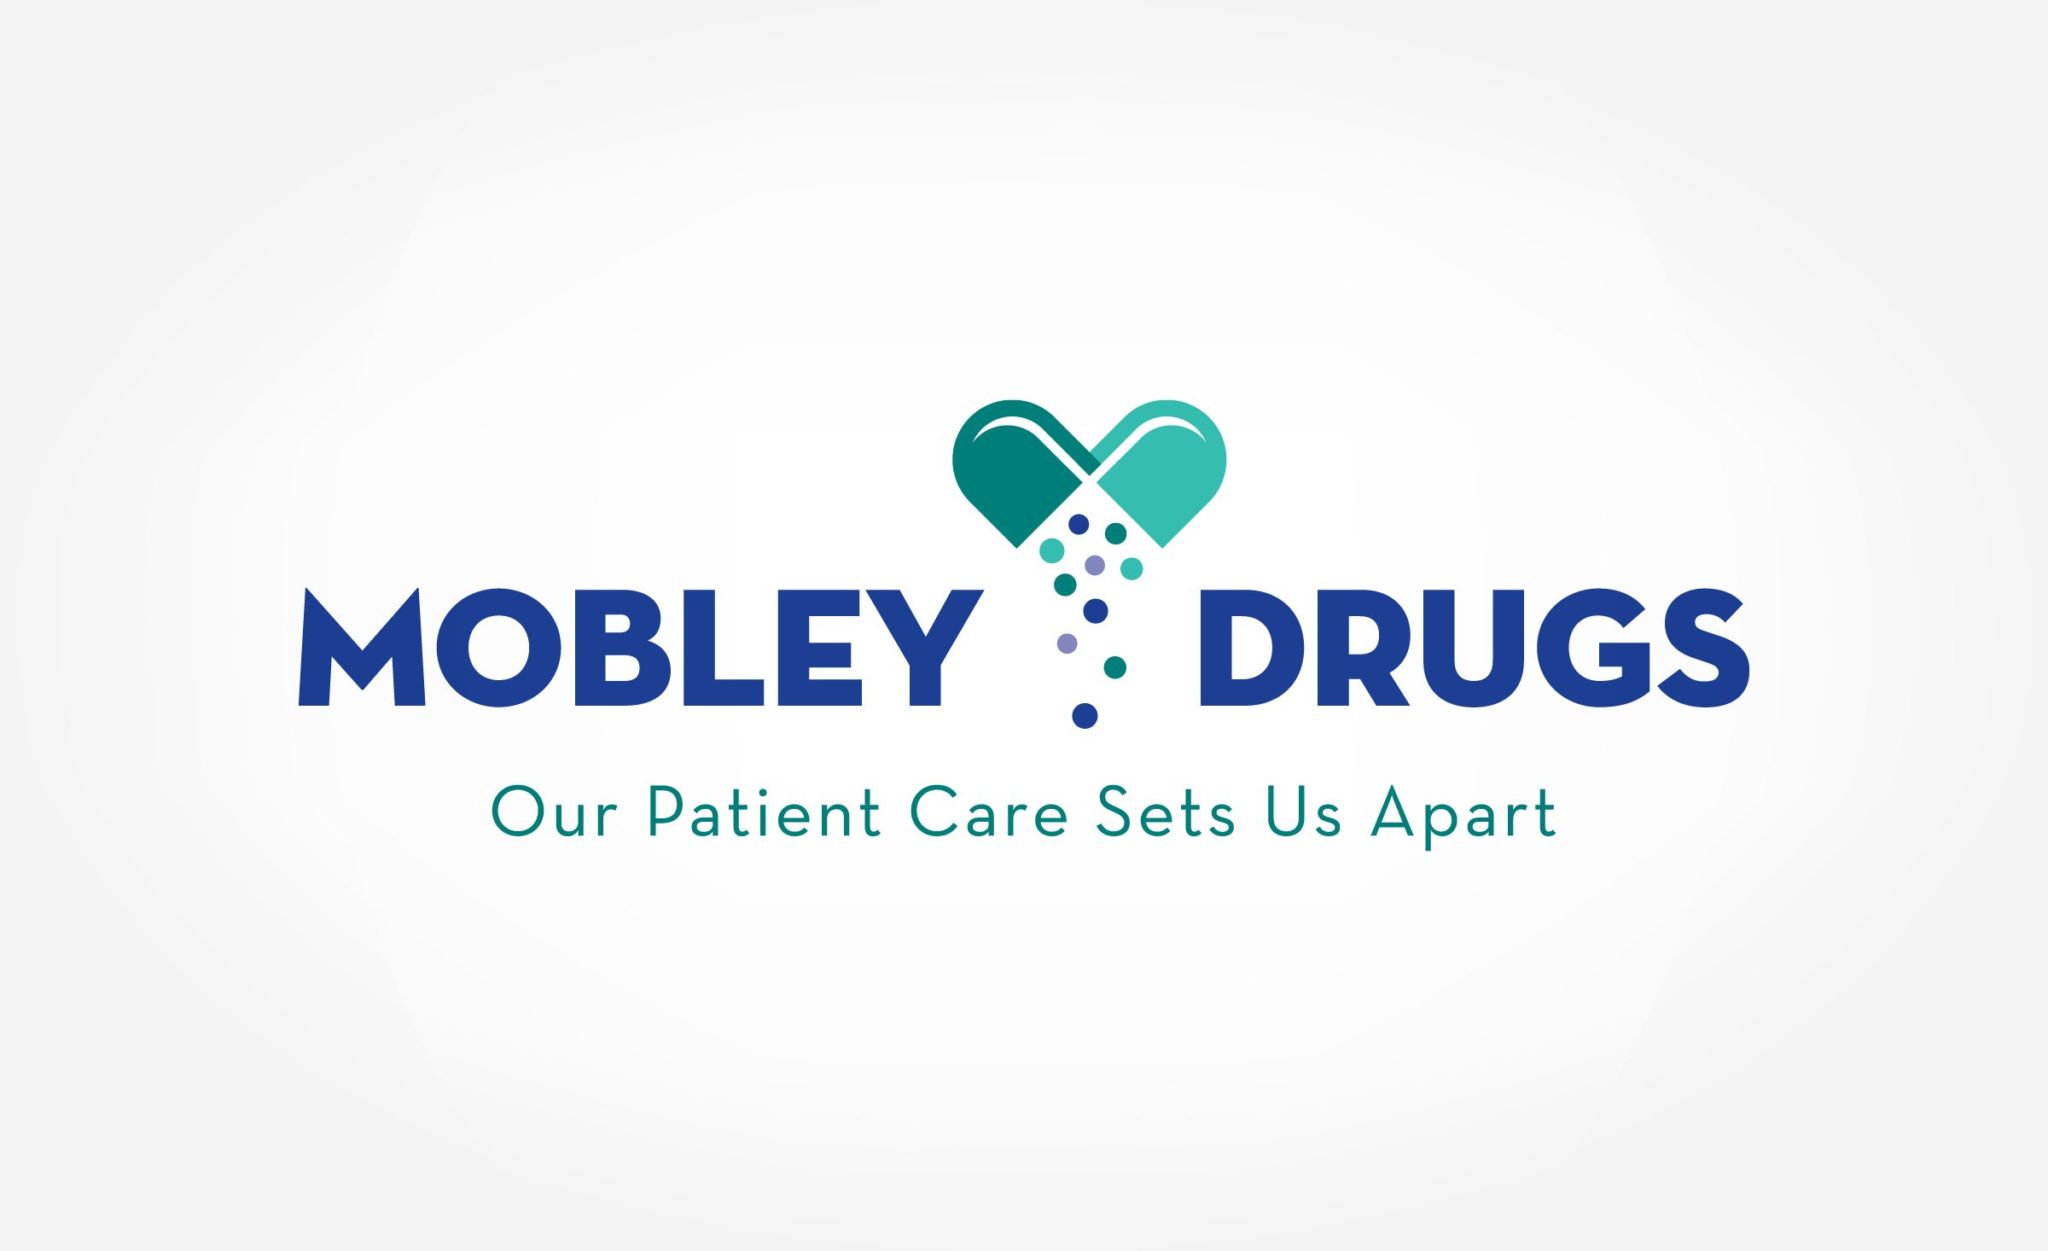 Mobley Drugs